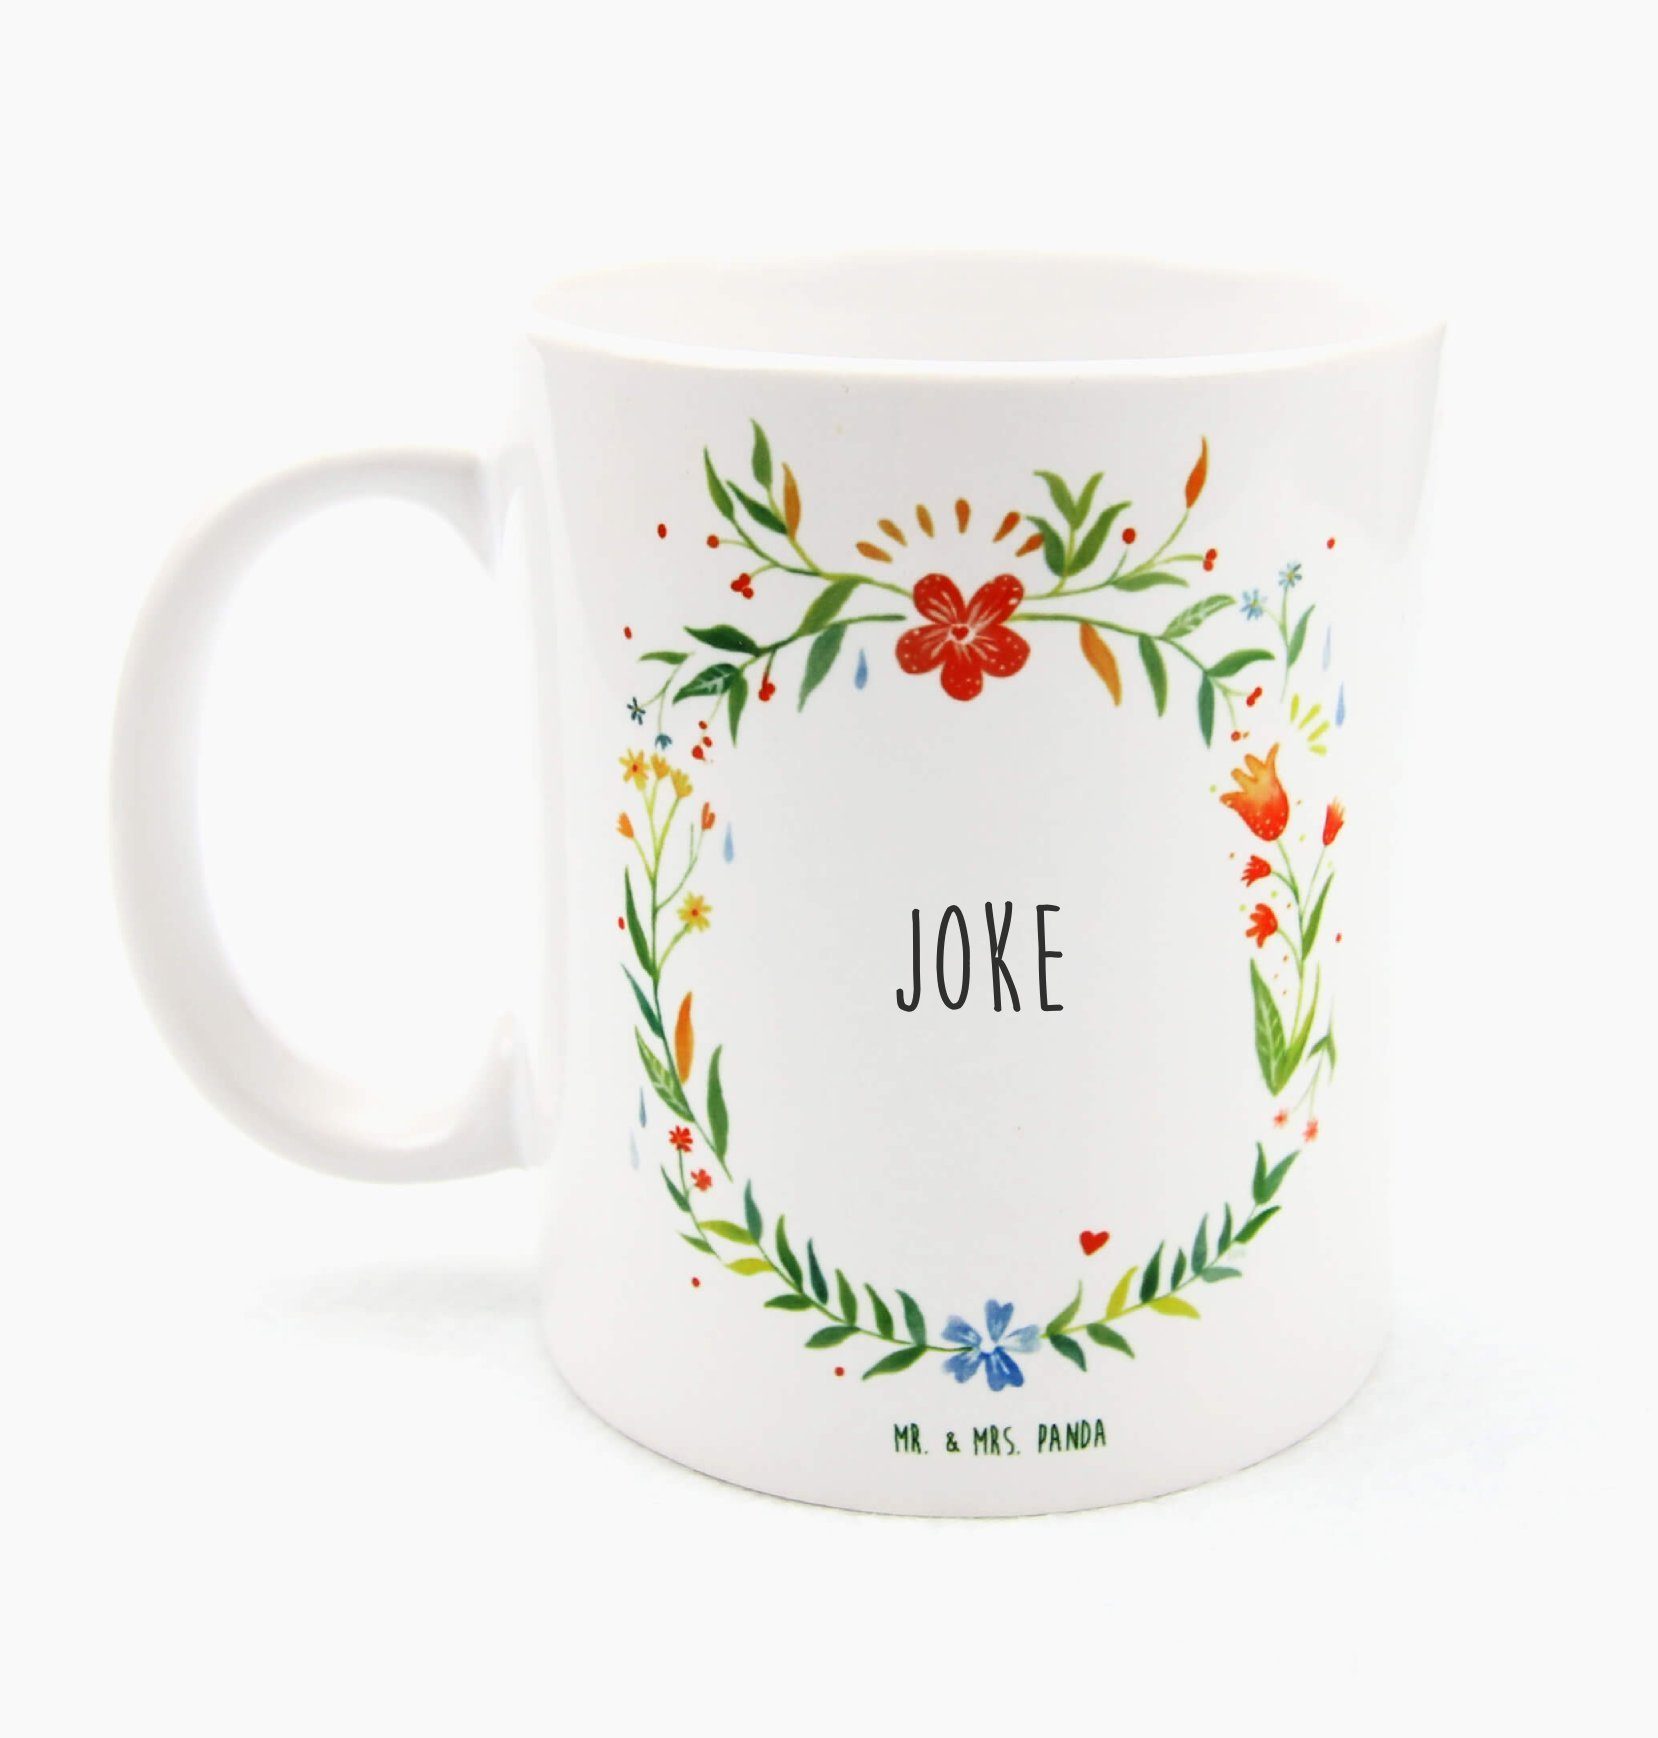 Mr. Joke Geschenk, Büro Keramik Mrs. Teetasse, Kaffeetasse, Tasse, - Teebecher, & Tasse Becher, Panda